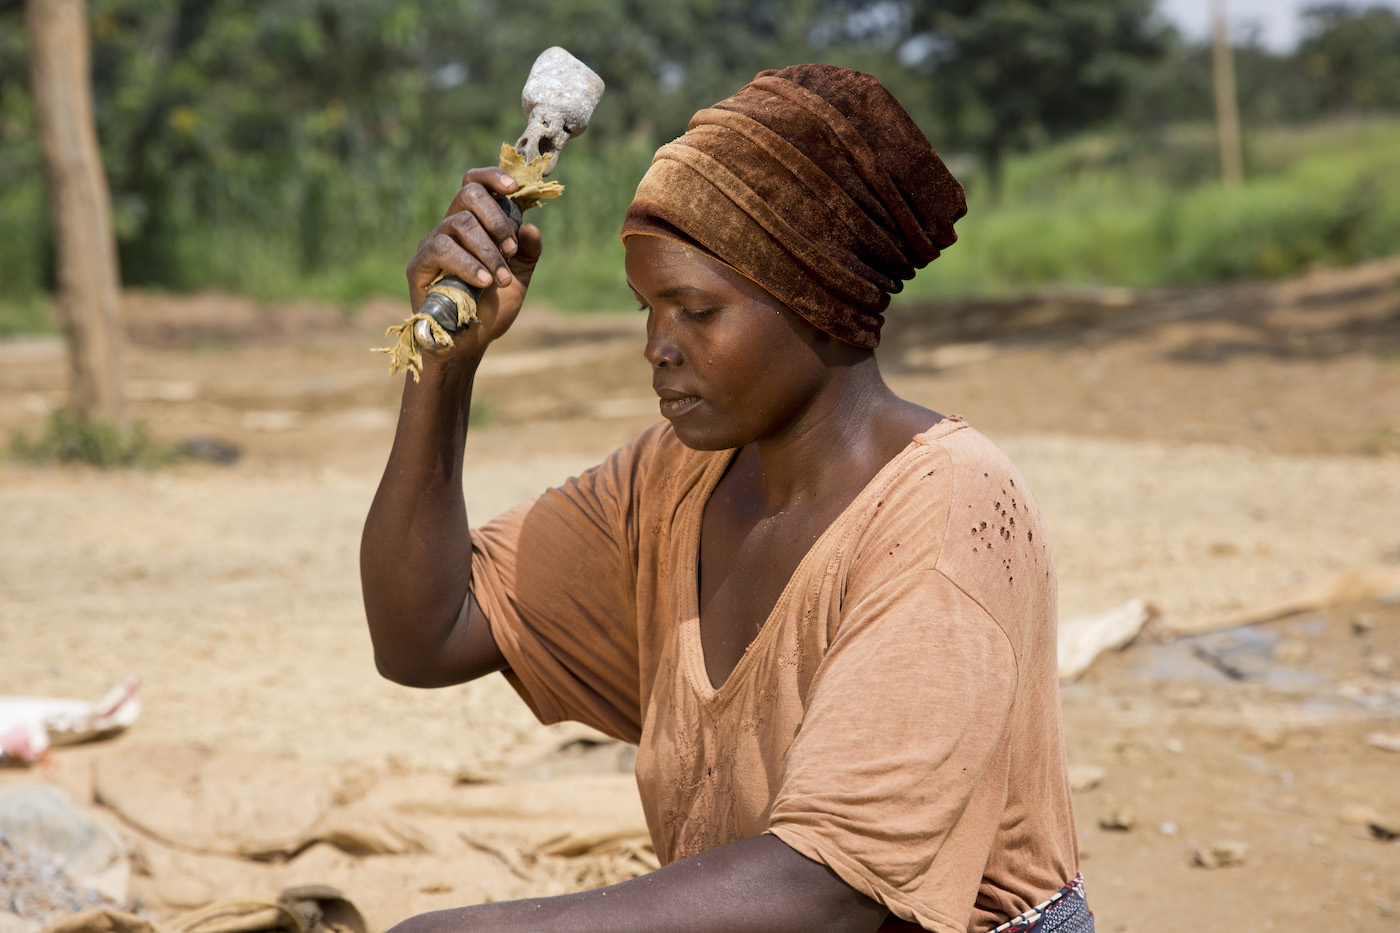 Woman gold miner in Kenya